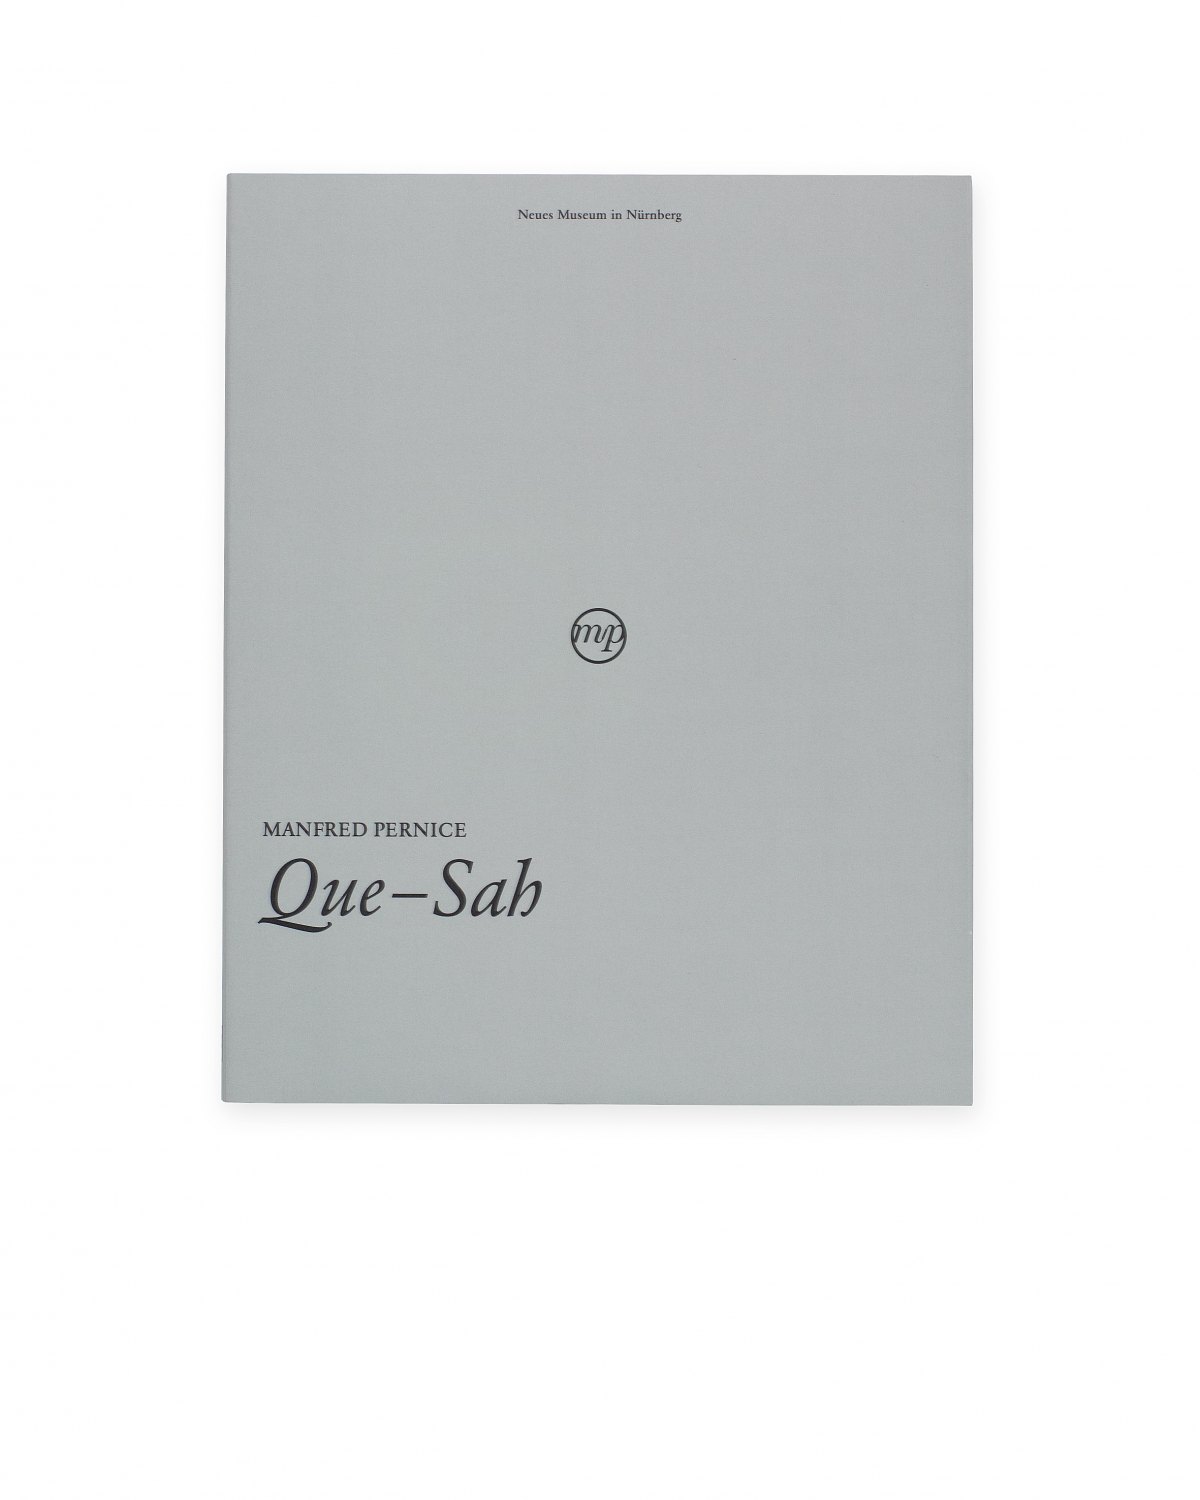 Manfred Pernice, Que-Sah Catalogue, Neues Museum, Nürnberg 2008, 207 p.  ISBN 978-3-94074-853-9